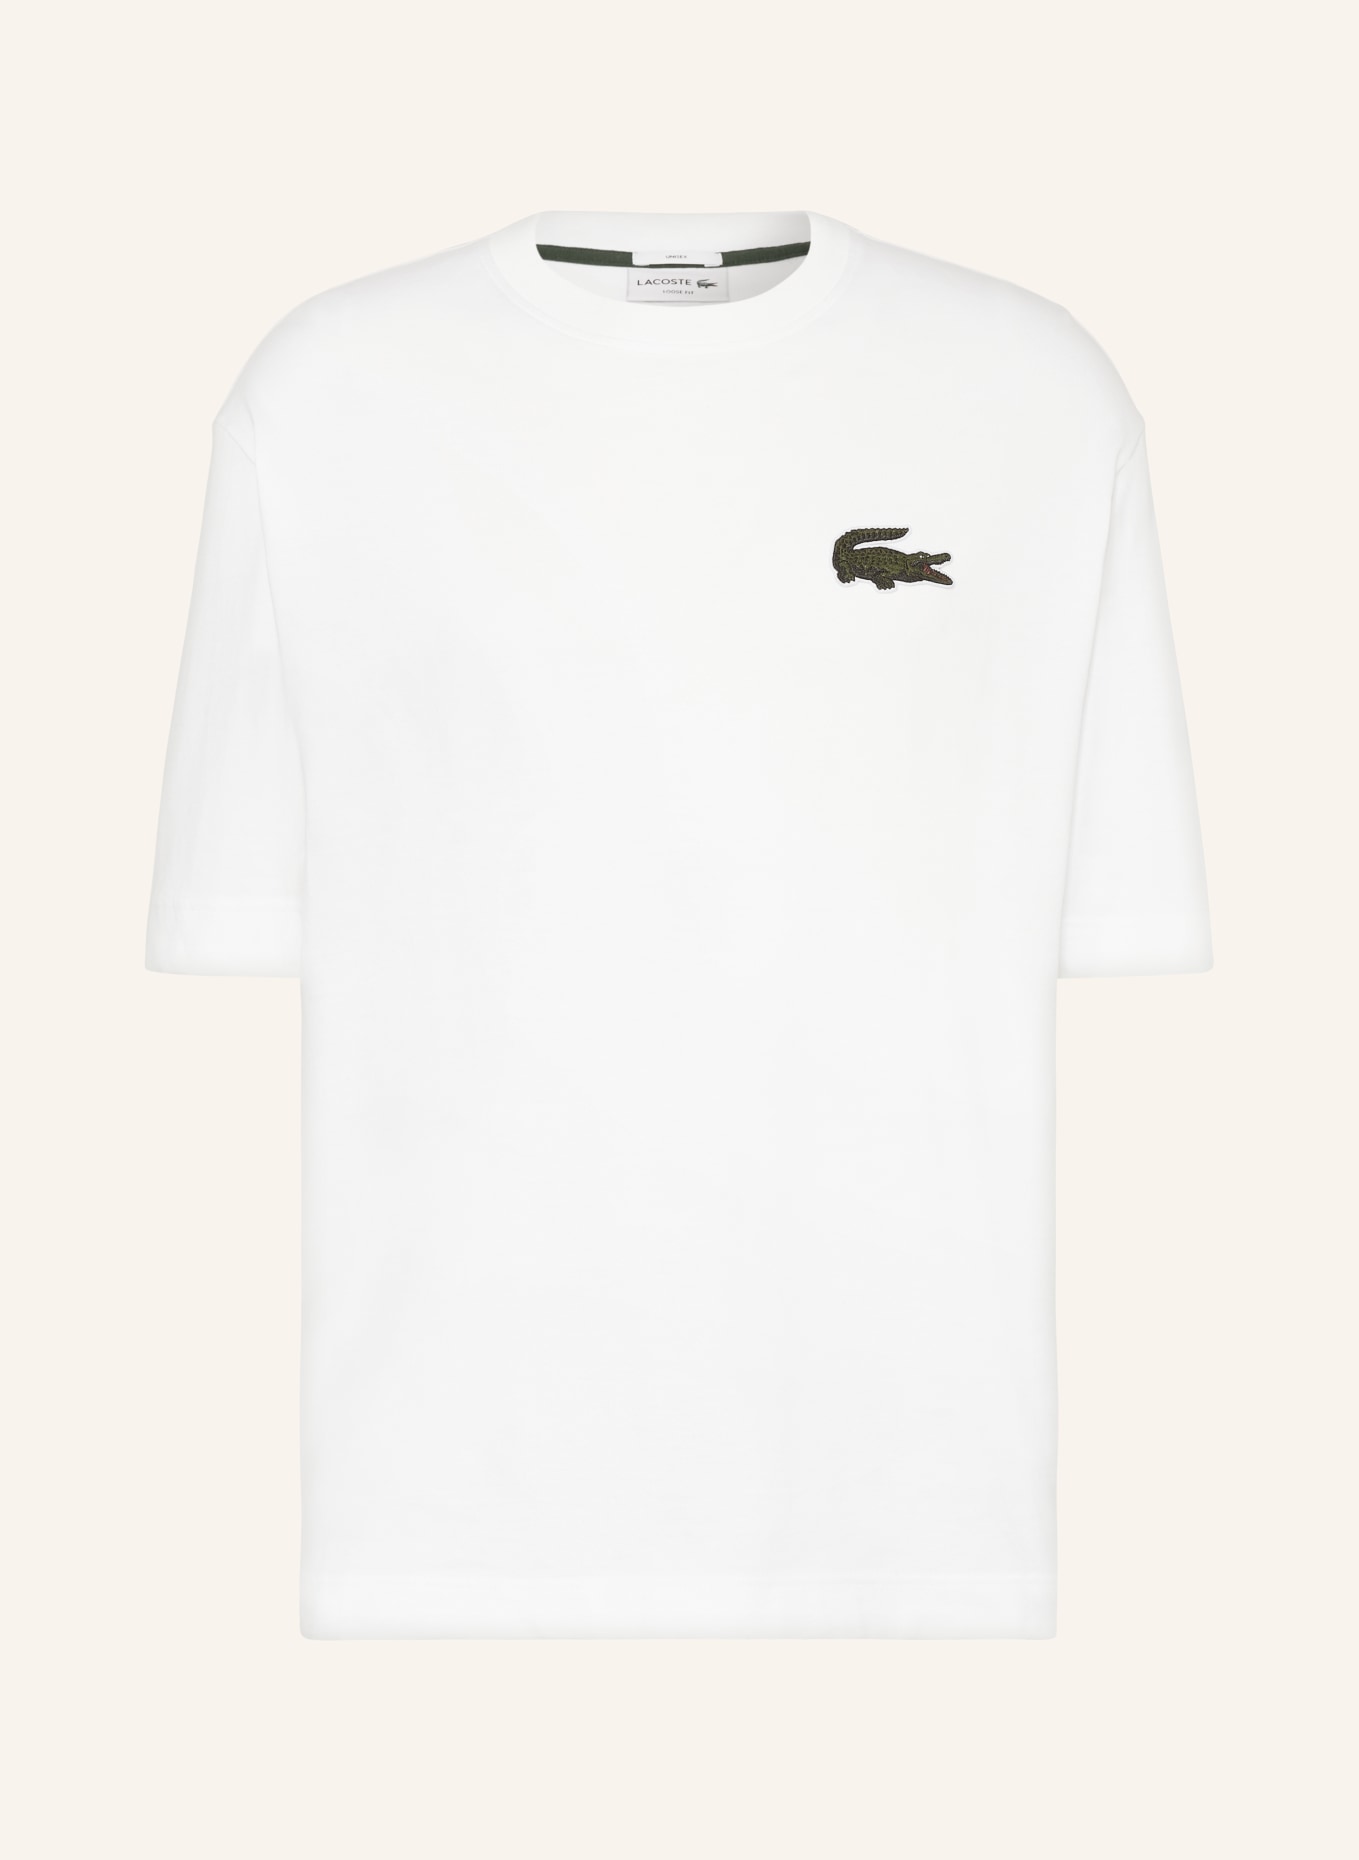 LACOSTE T-Shirt, Farbe: WEISS (Bild 1)